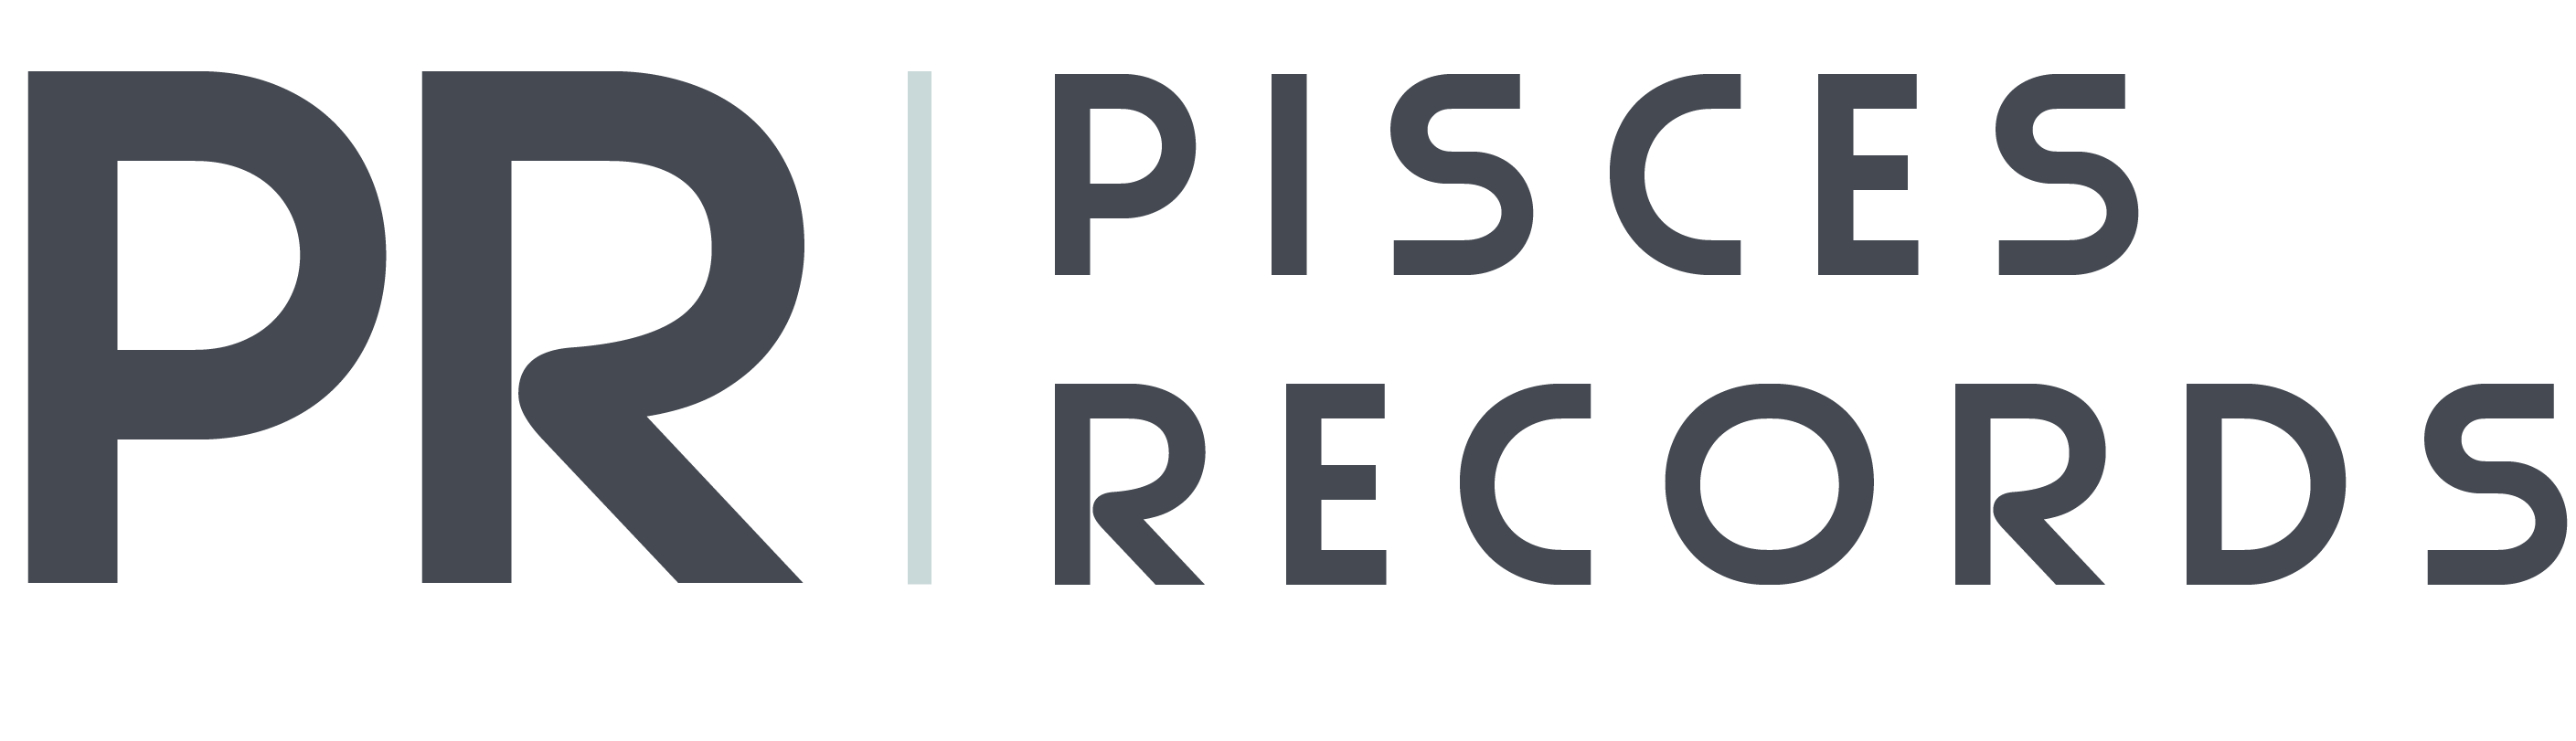 PISCES Records